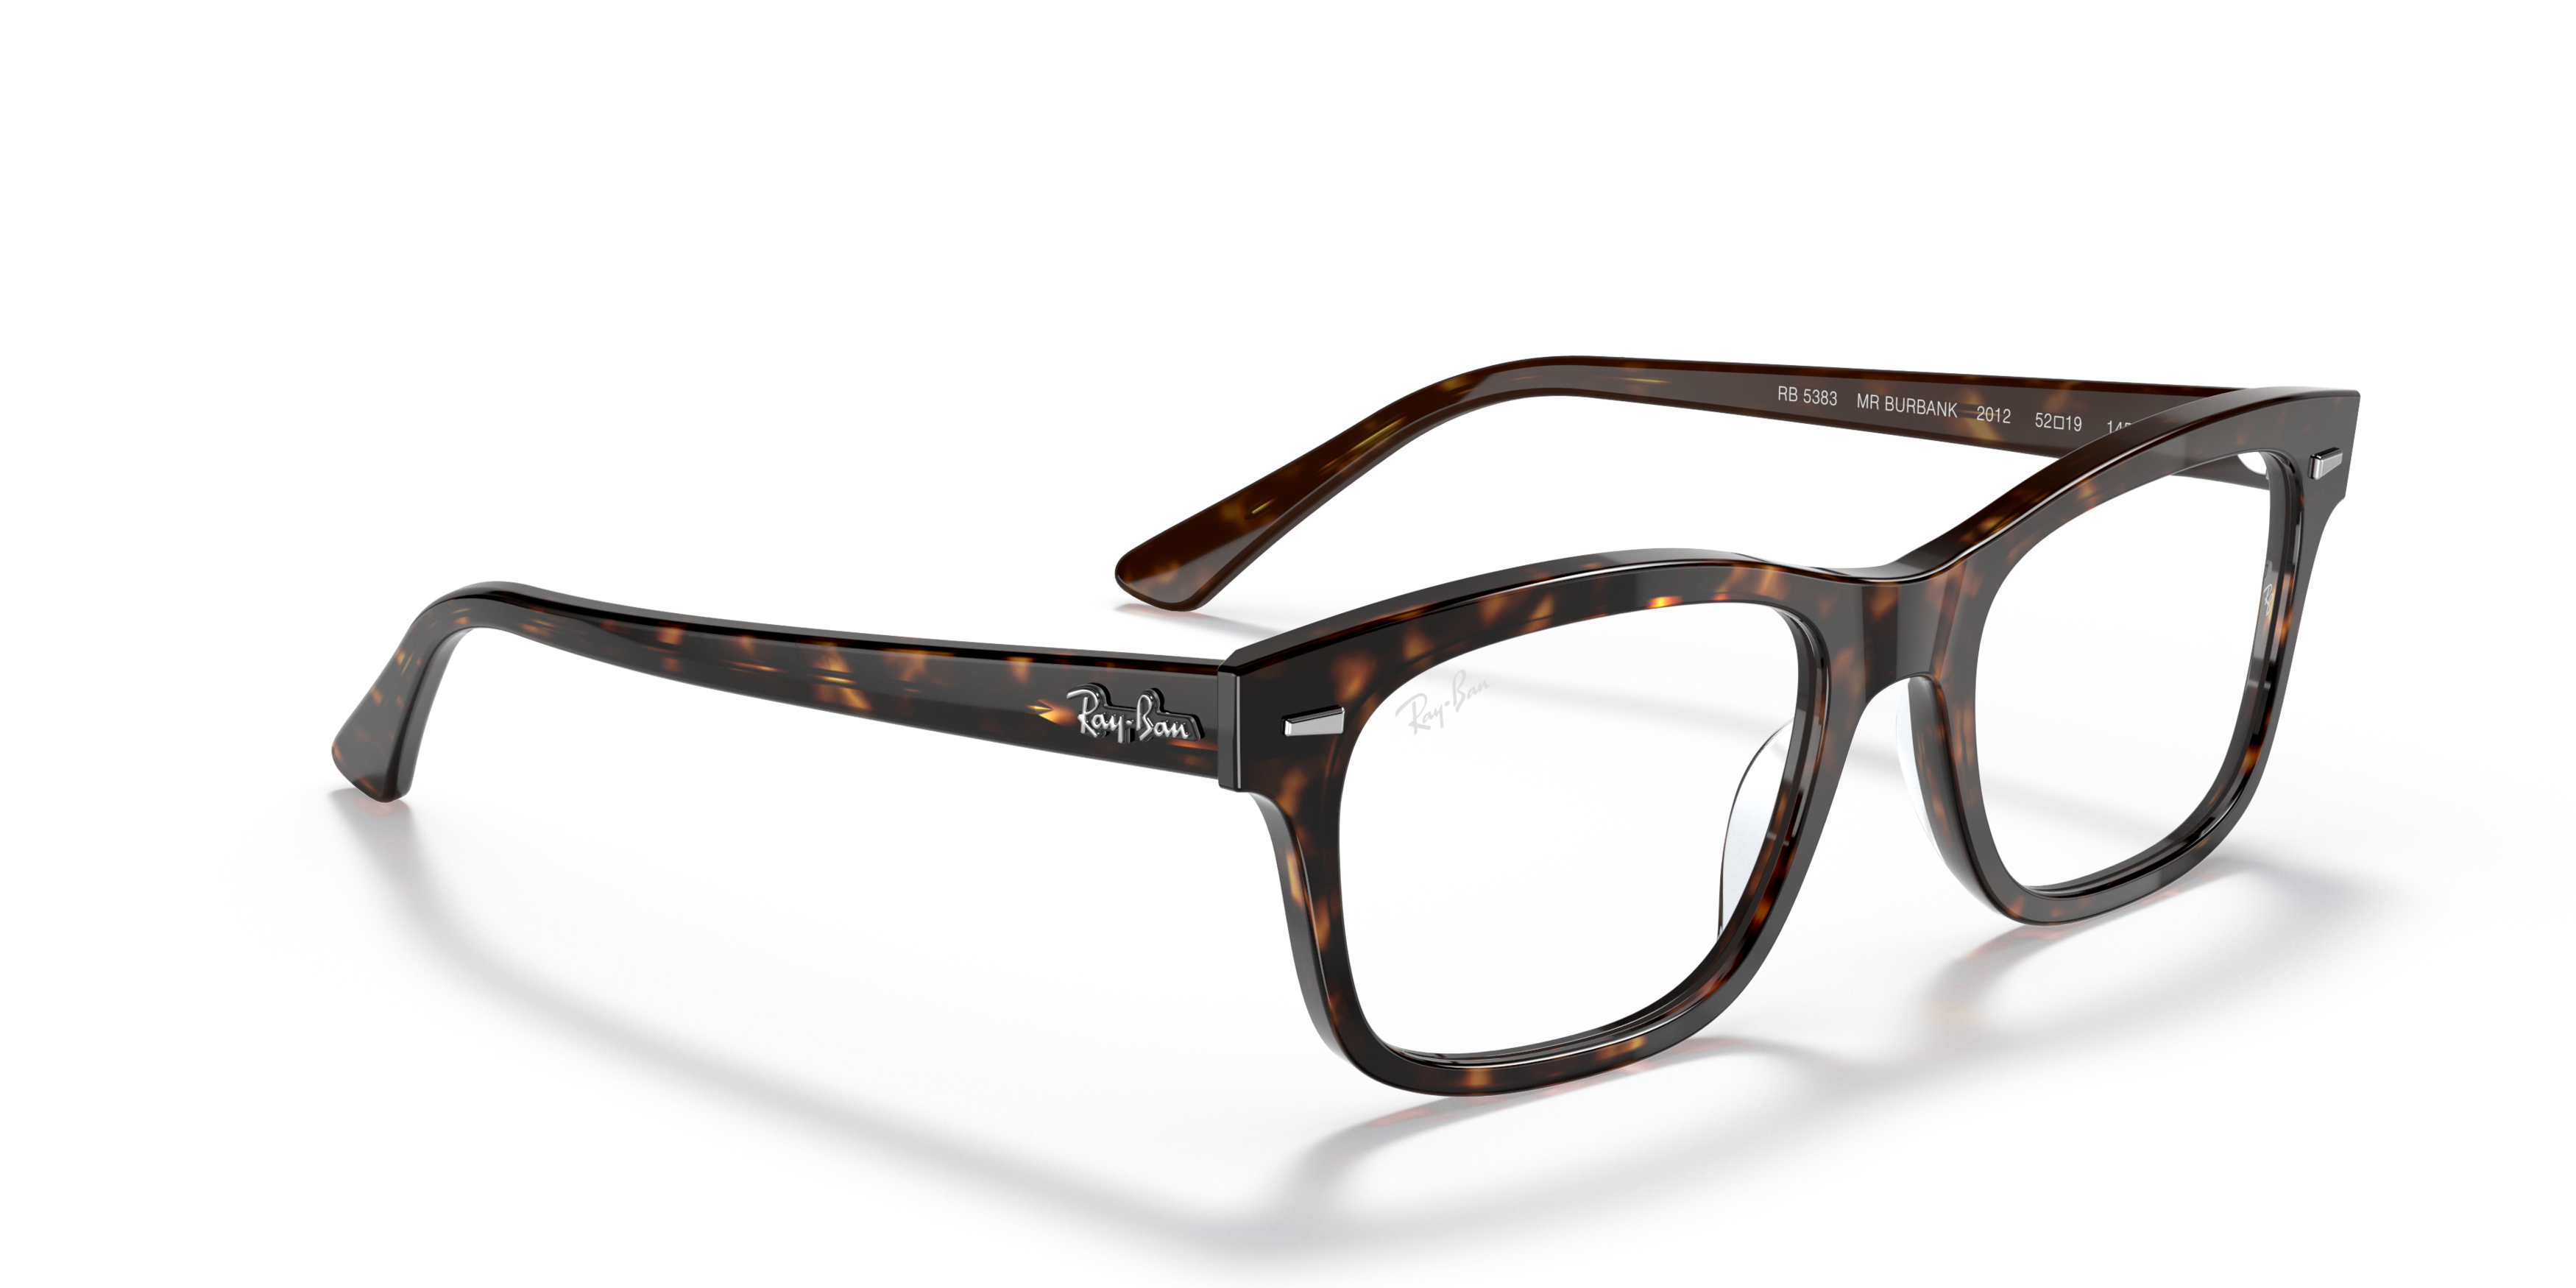 Angle_Right01 Ray-Ban Mr Burbank RX 5383 Glasses Transparent / Tortoise Shell